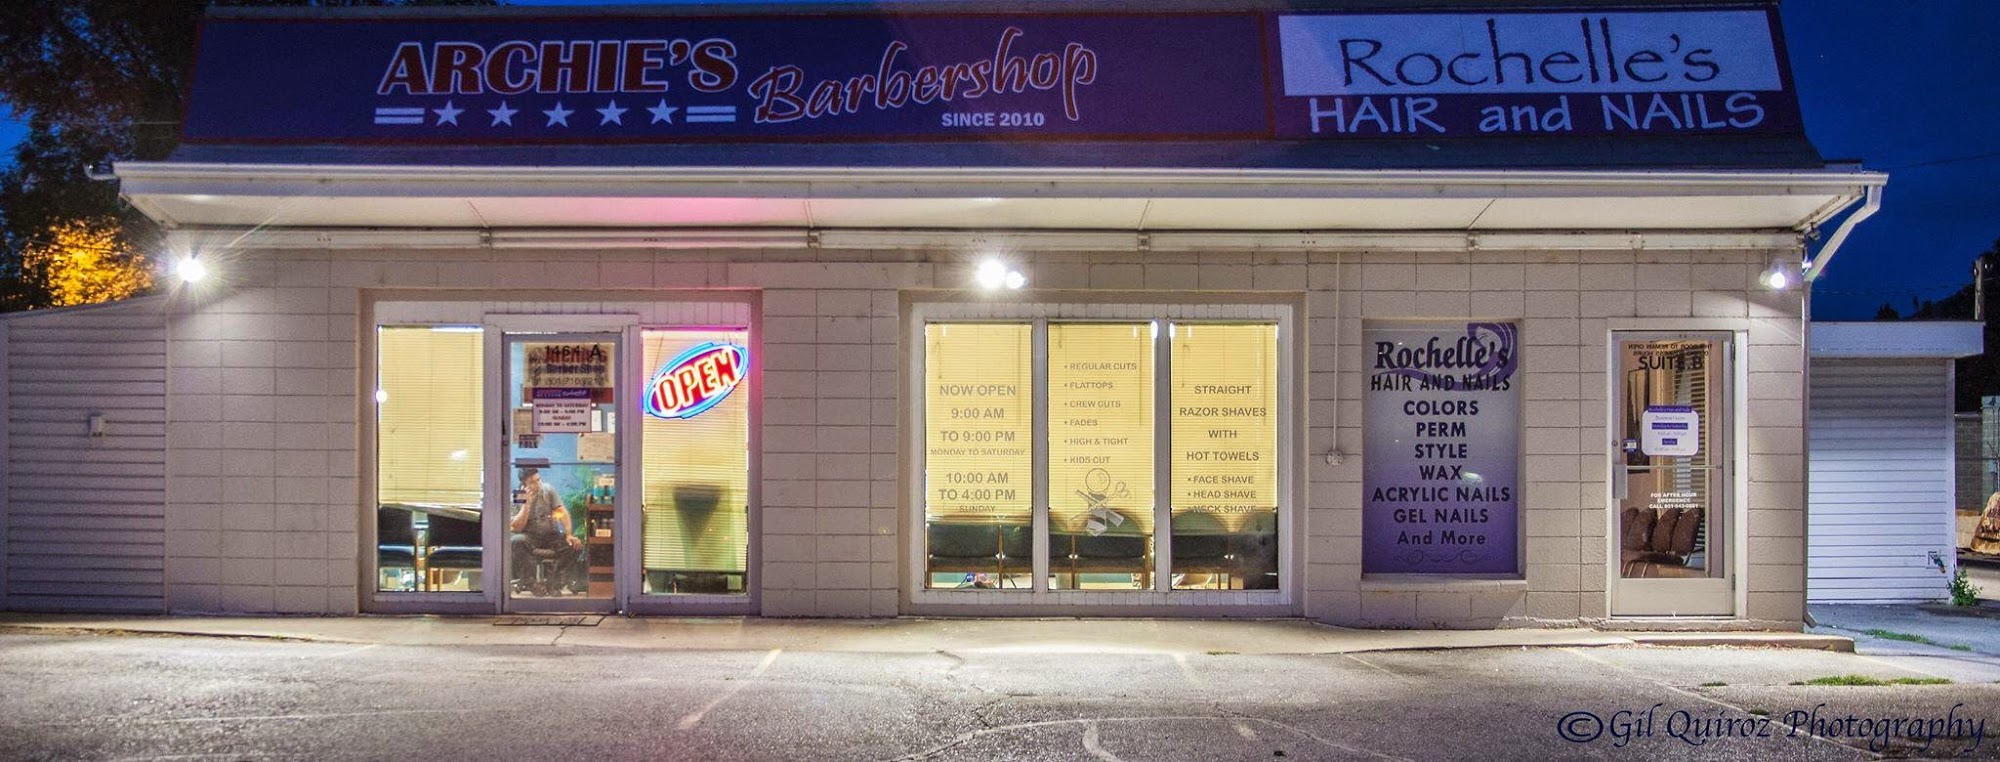 Archie's Barber Shop Layton